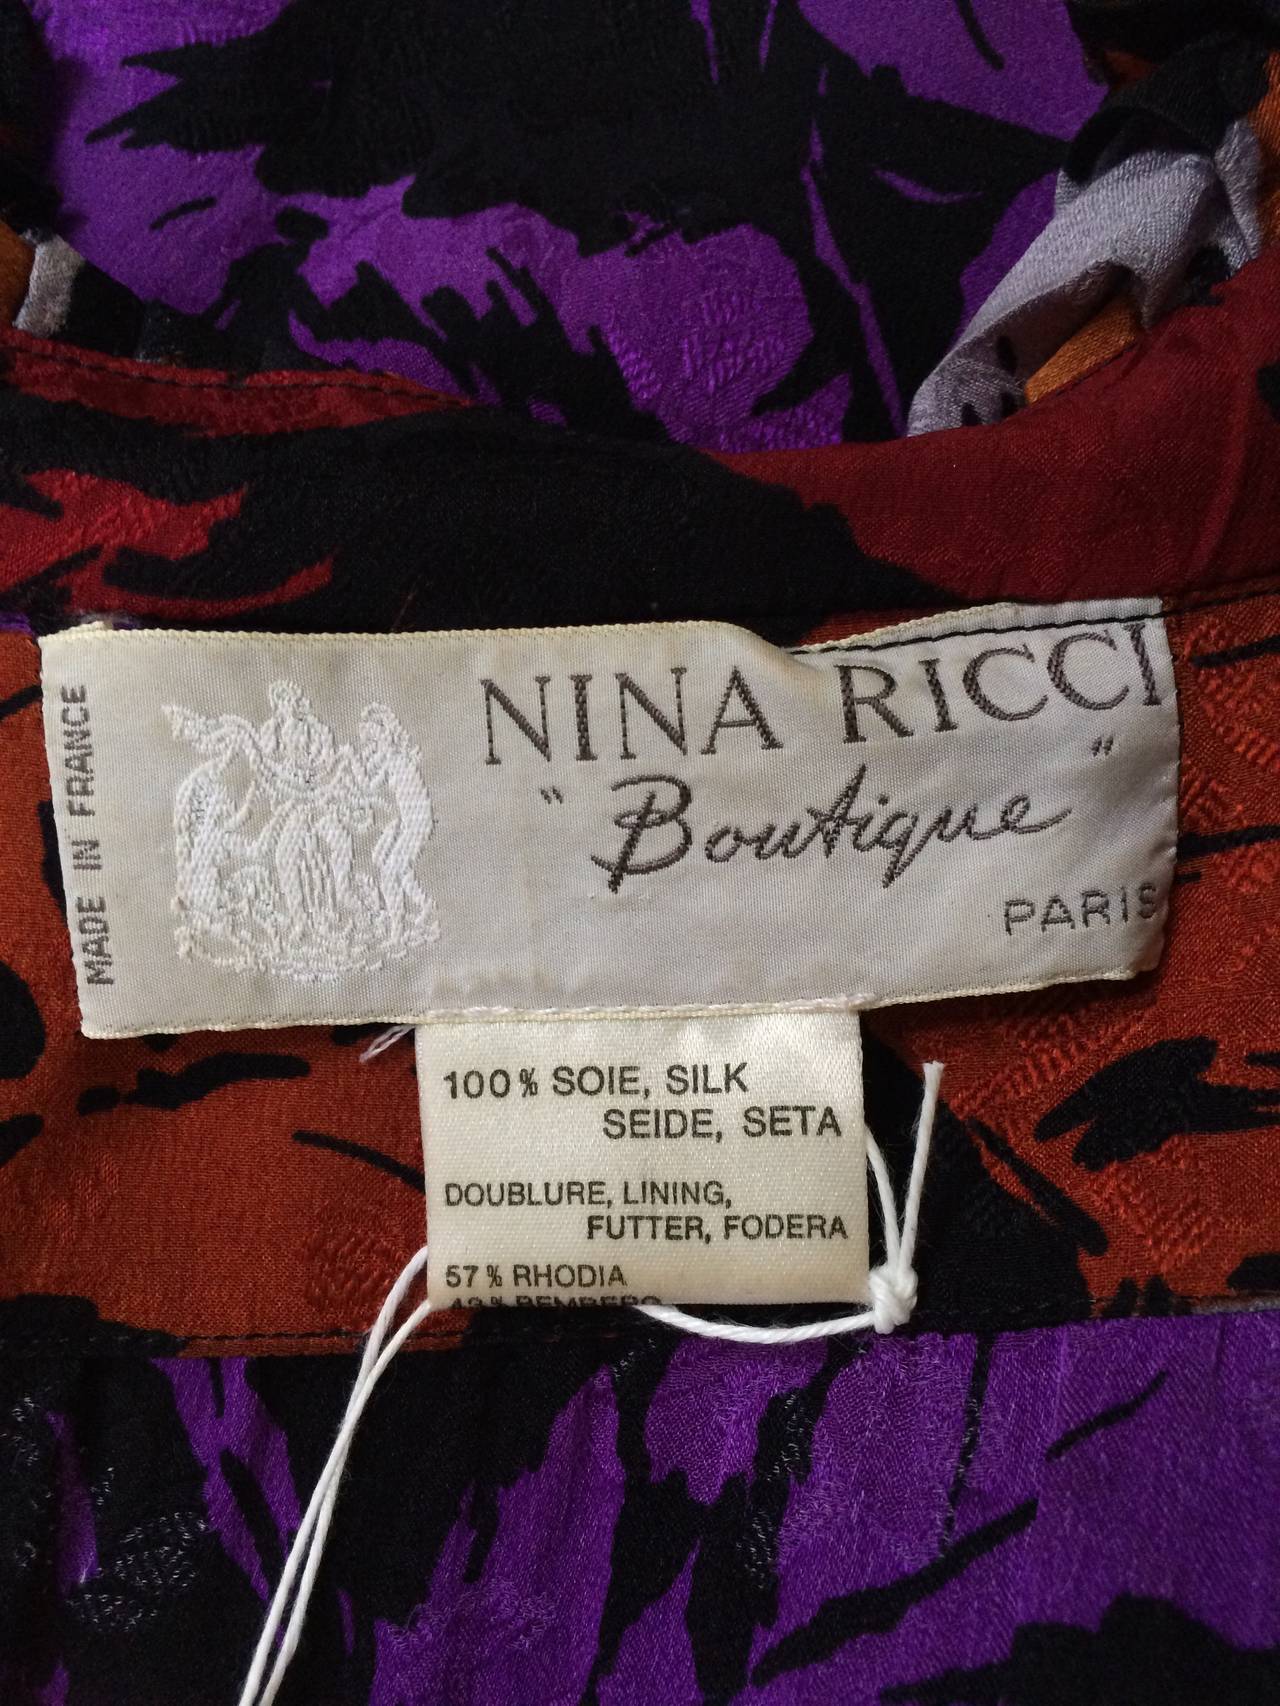 Nina Ricci Boutique Paris 70s silk dress size 4/6. 5